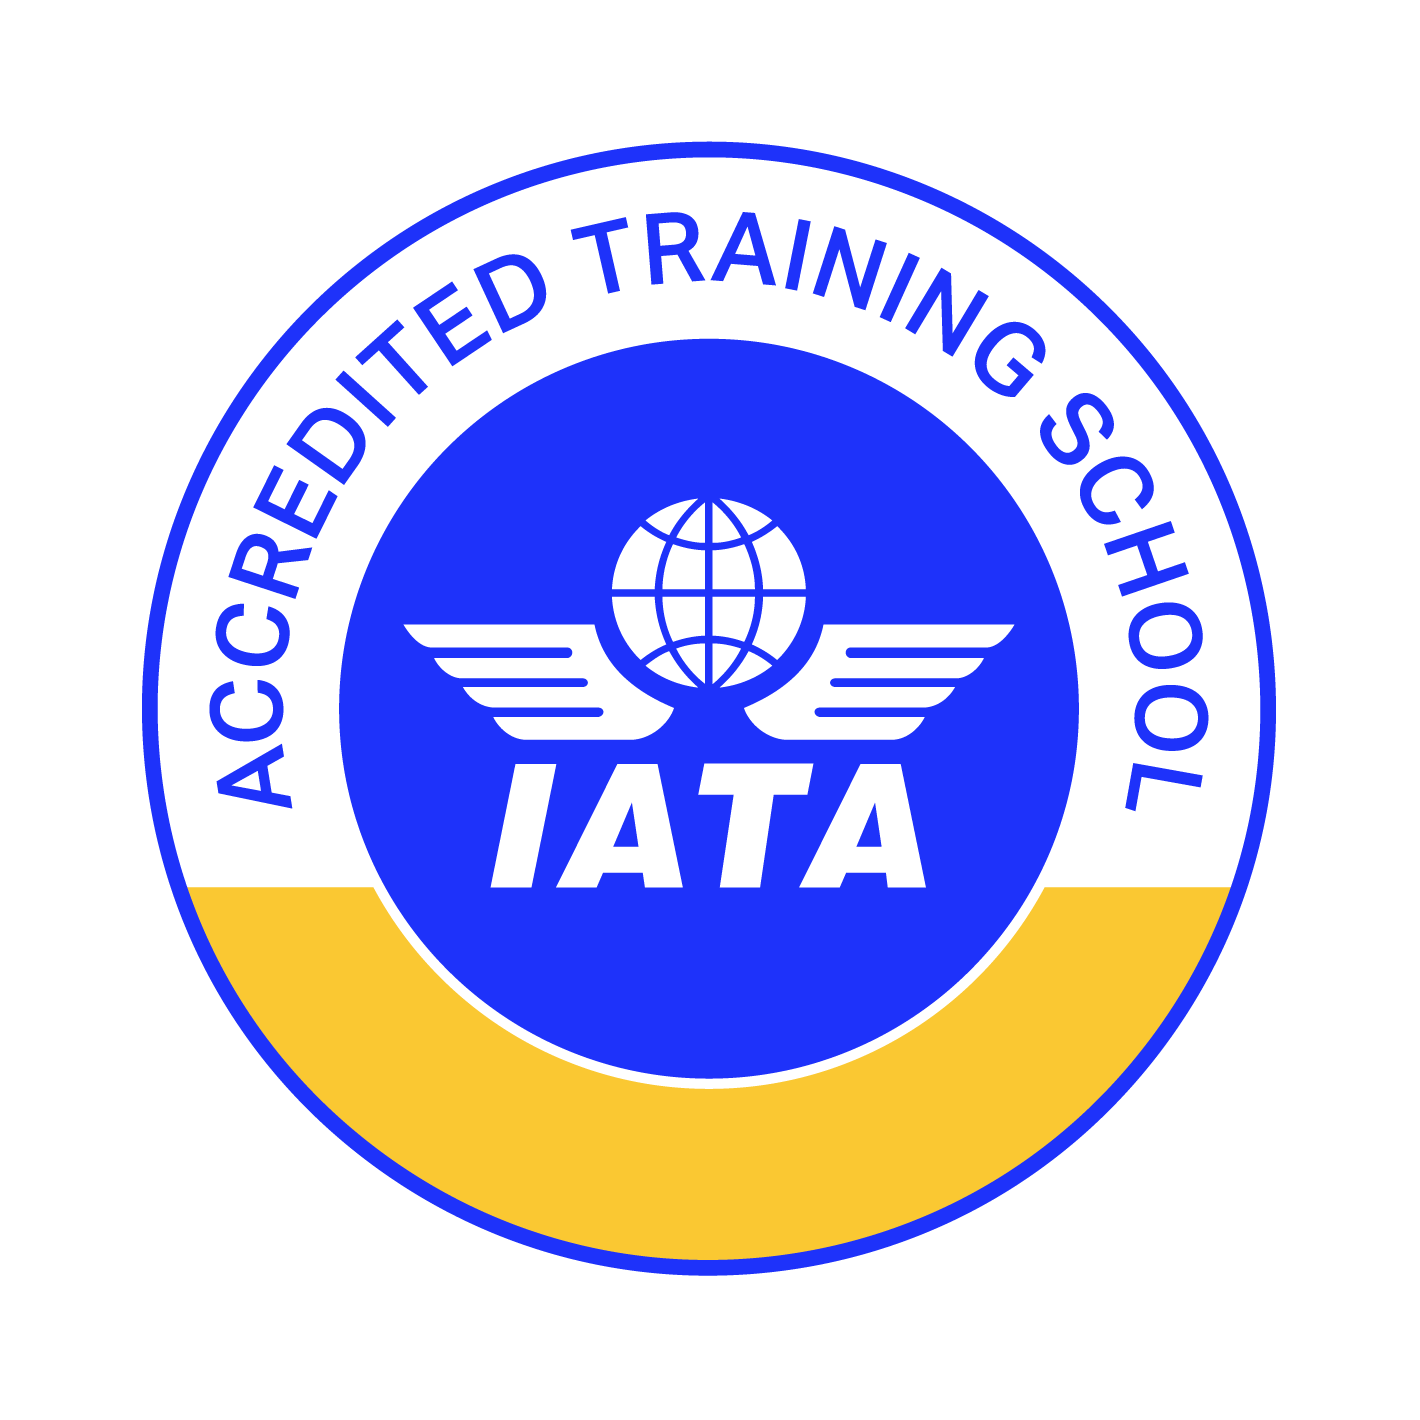 IATA Accredited School